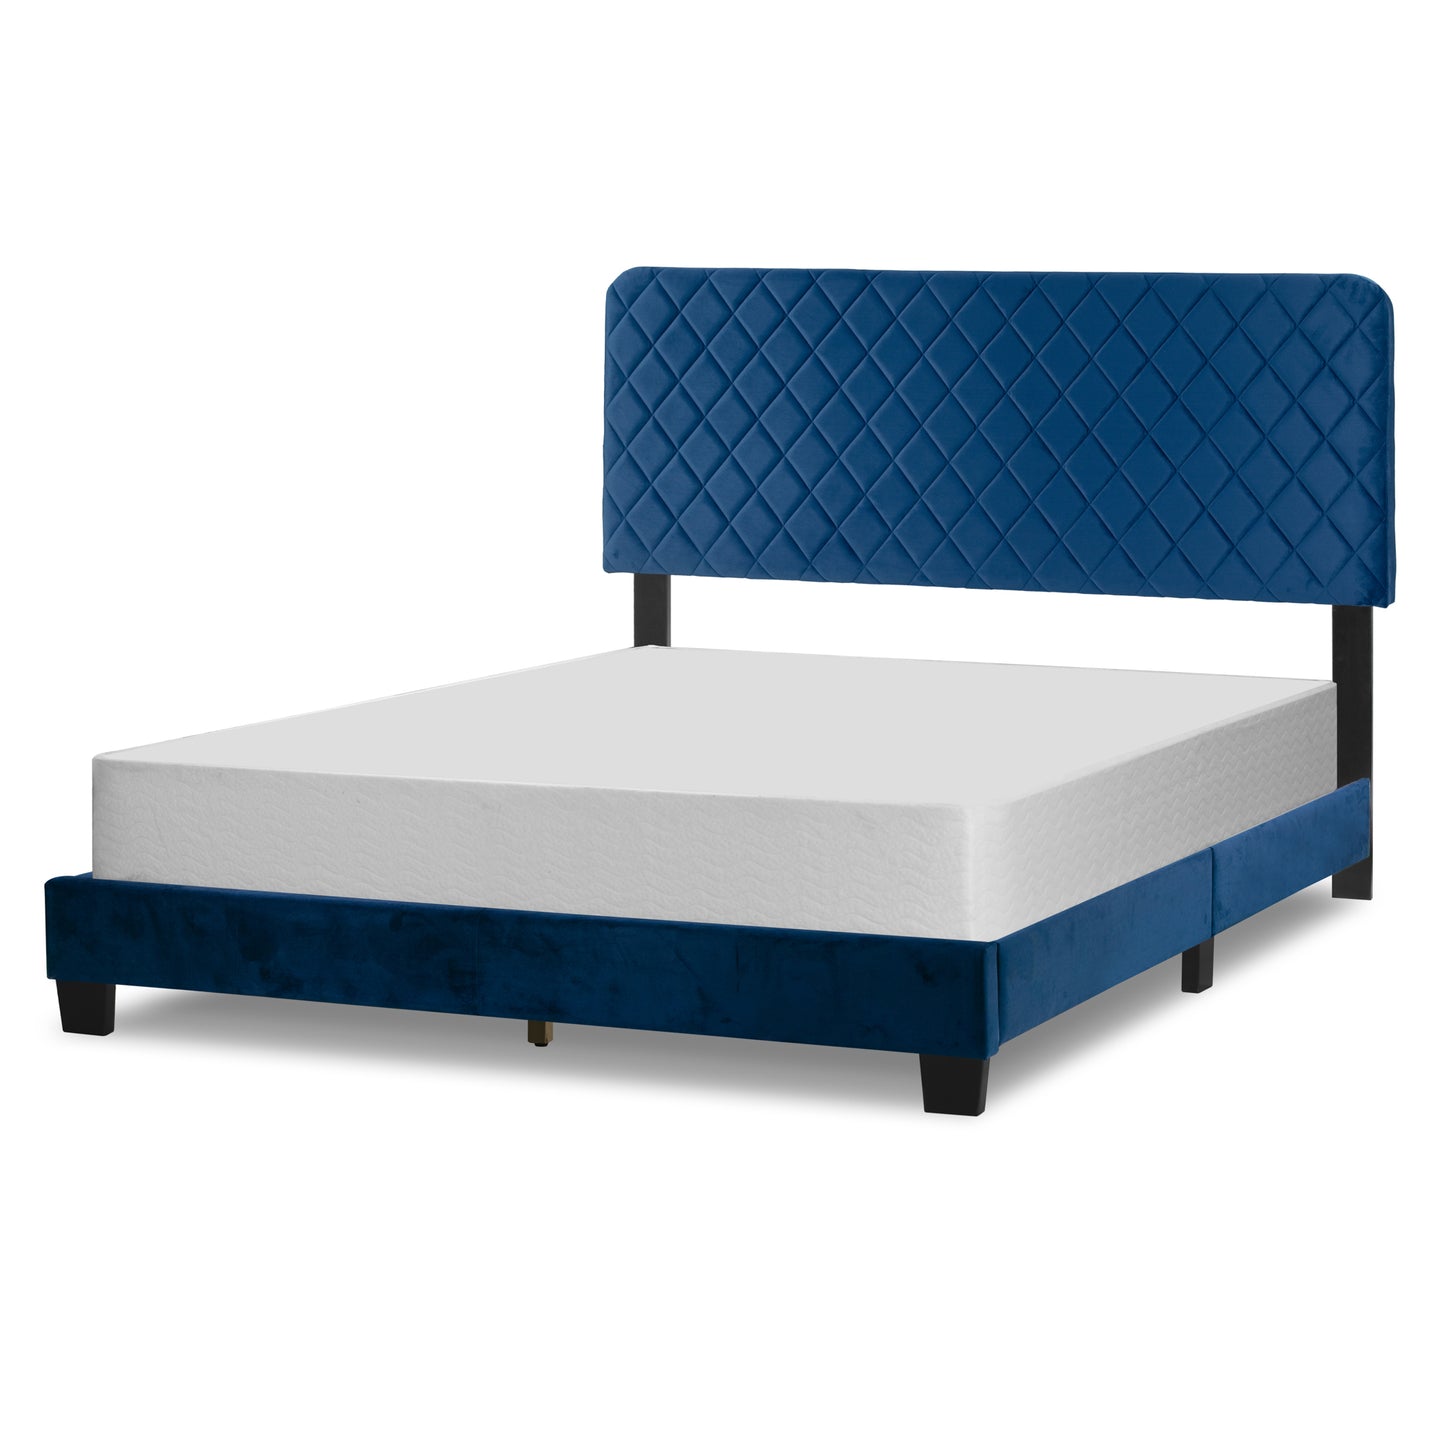 Aurum Navy Blue Velvety Fabric Queen Bed with Decorative Stitching